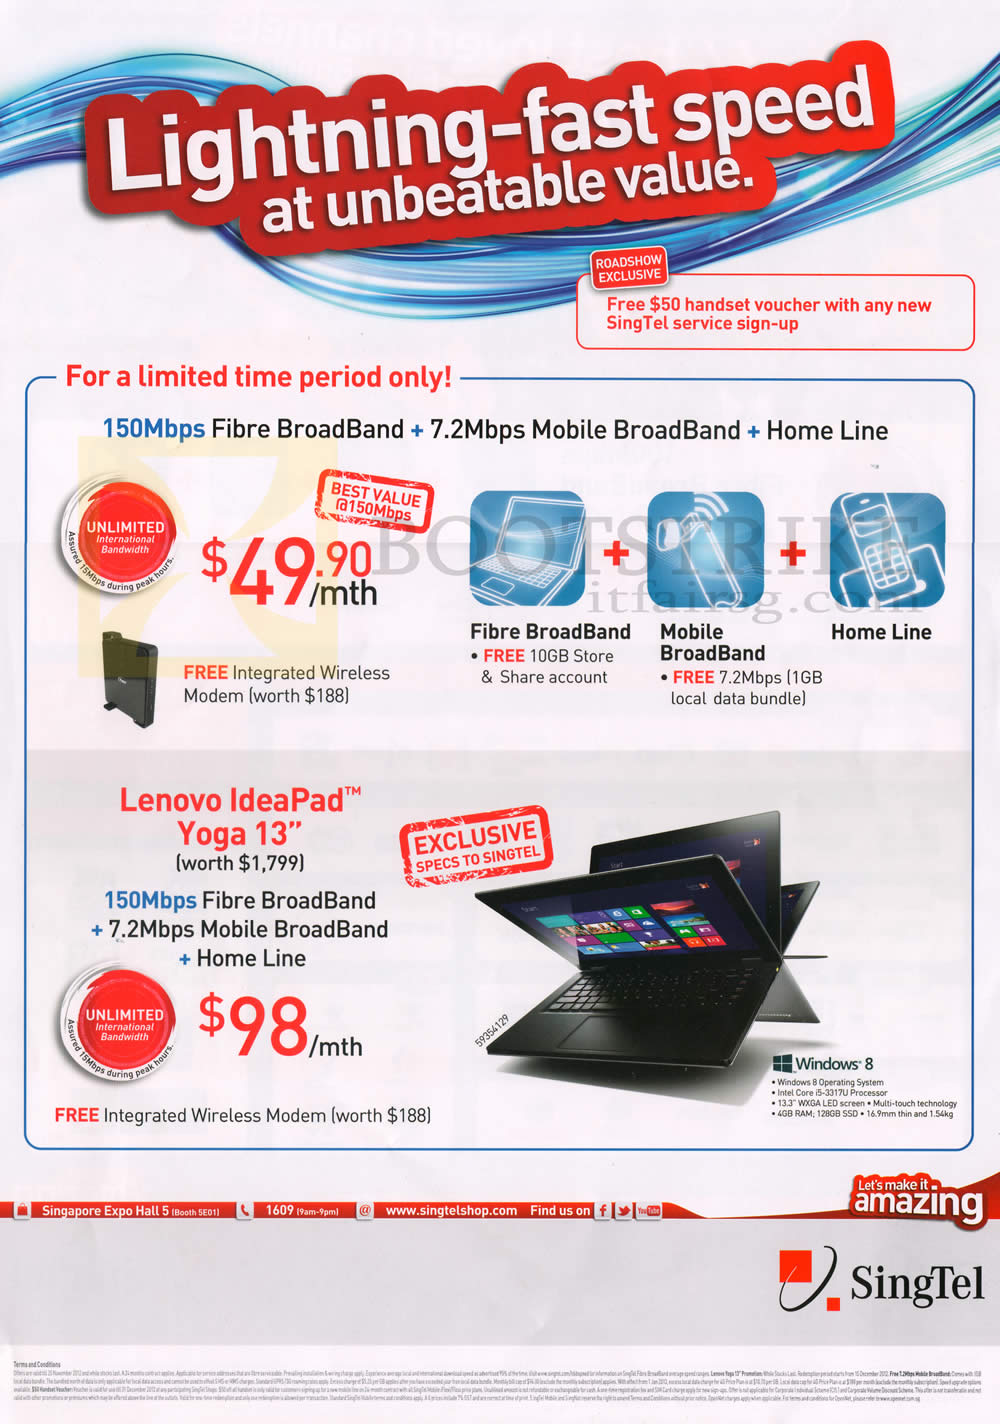 SITEX 2012 price list image brochure of Singtel Broadband Fibre 150Mbps, Free Lenovo IdeaPad Yoga 13 Notebook, Fixed Line, Mobile Broadband